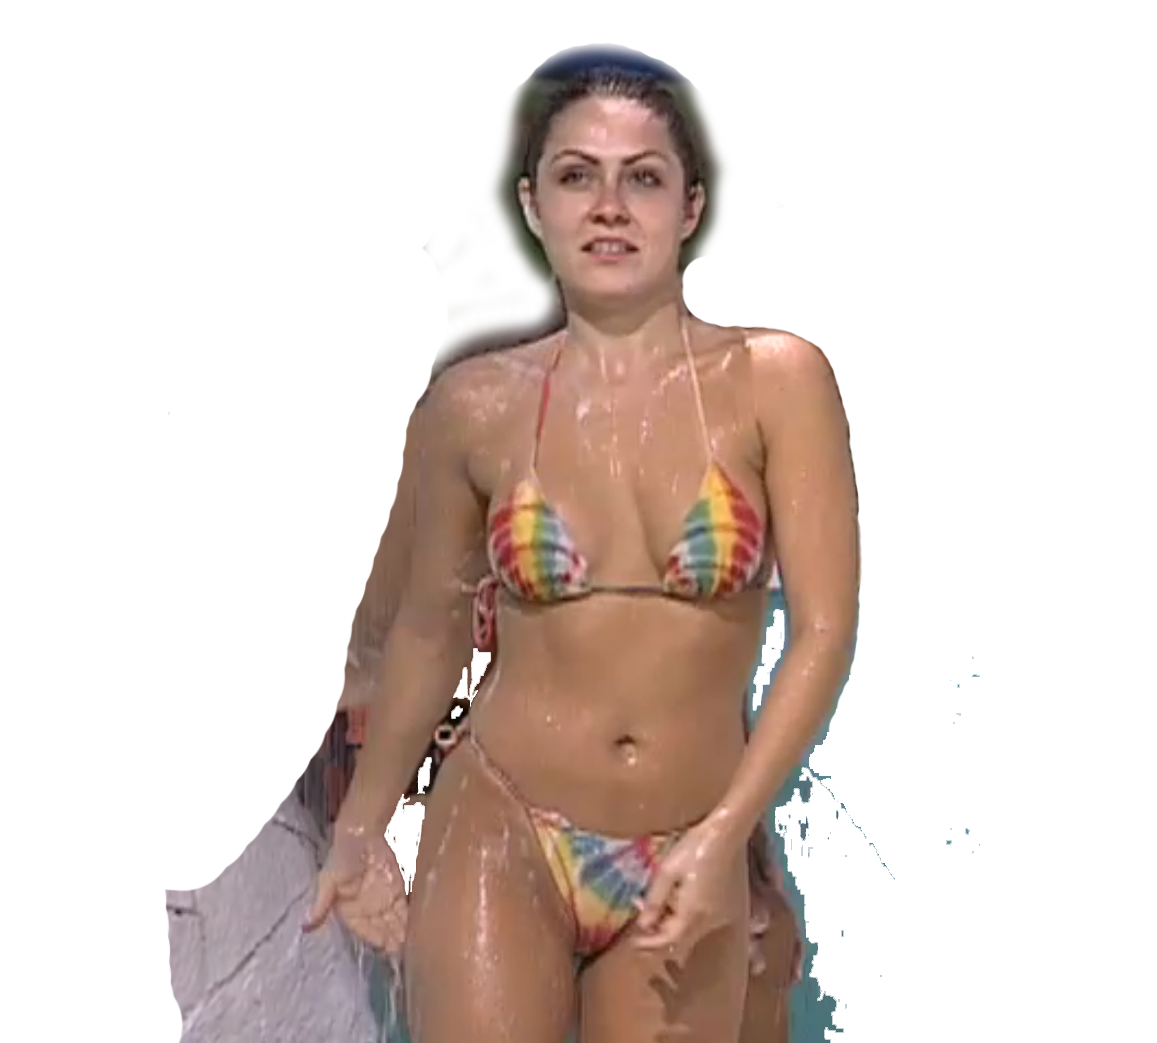 A woman in a bikini holding a surfboard - Bbb Renata